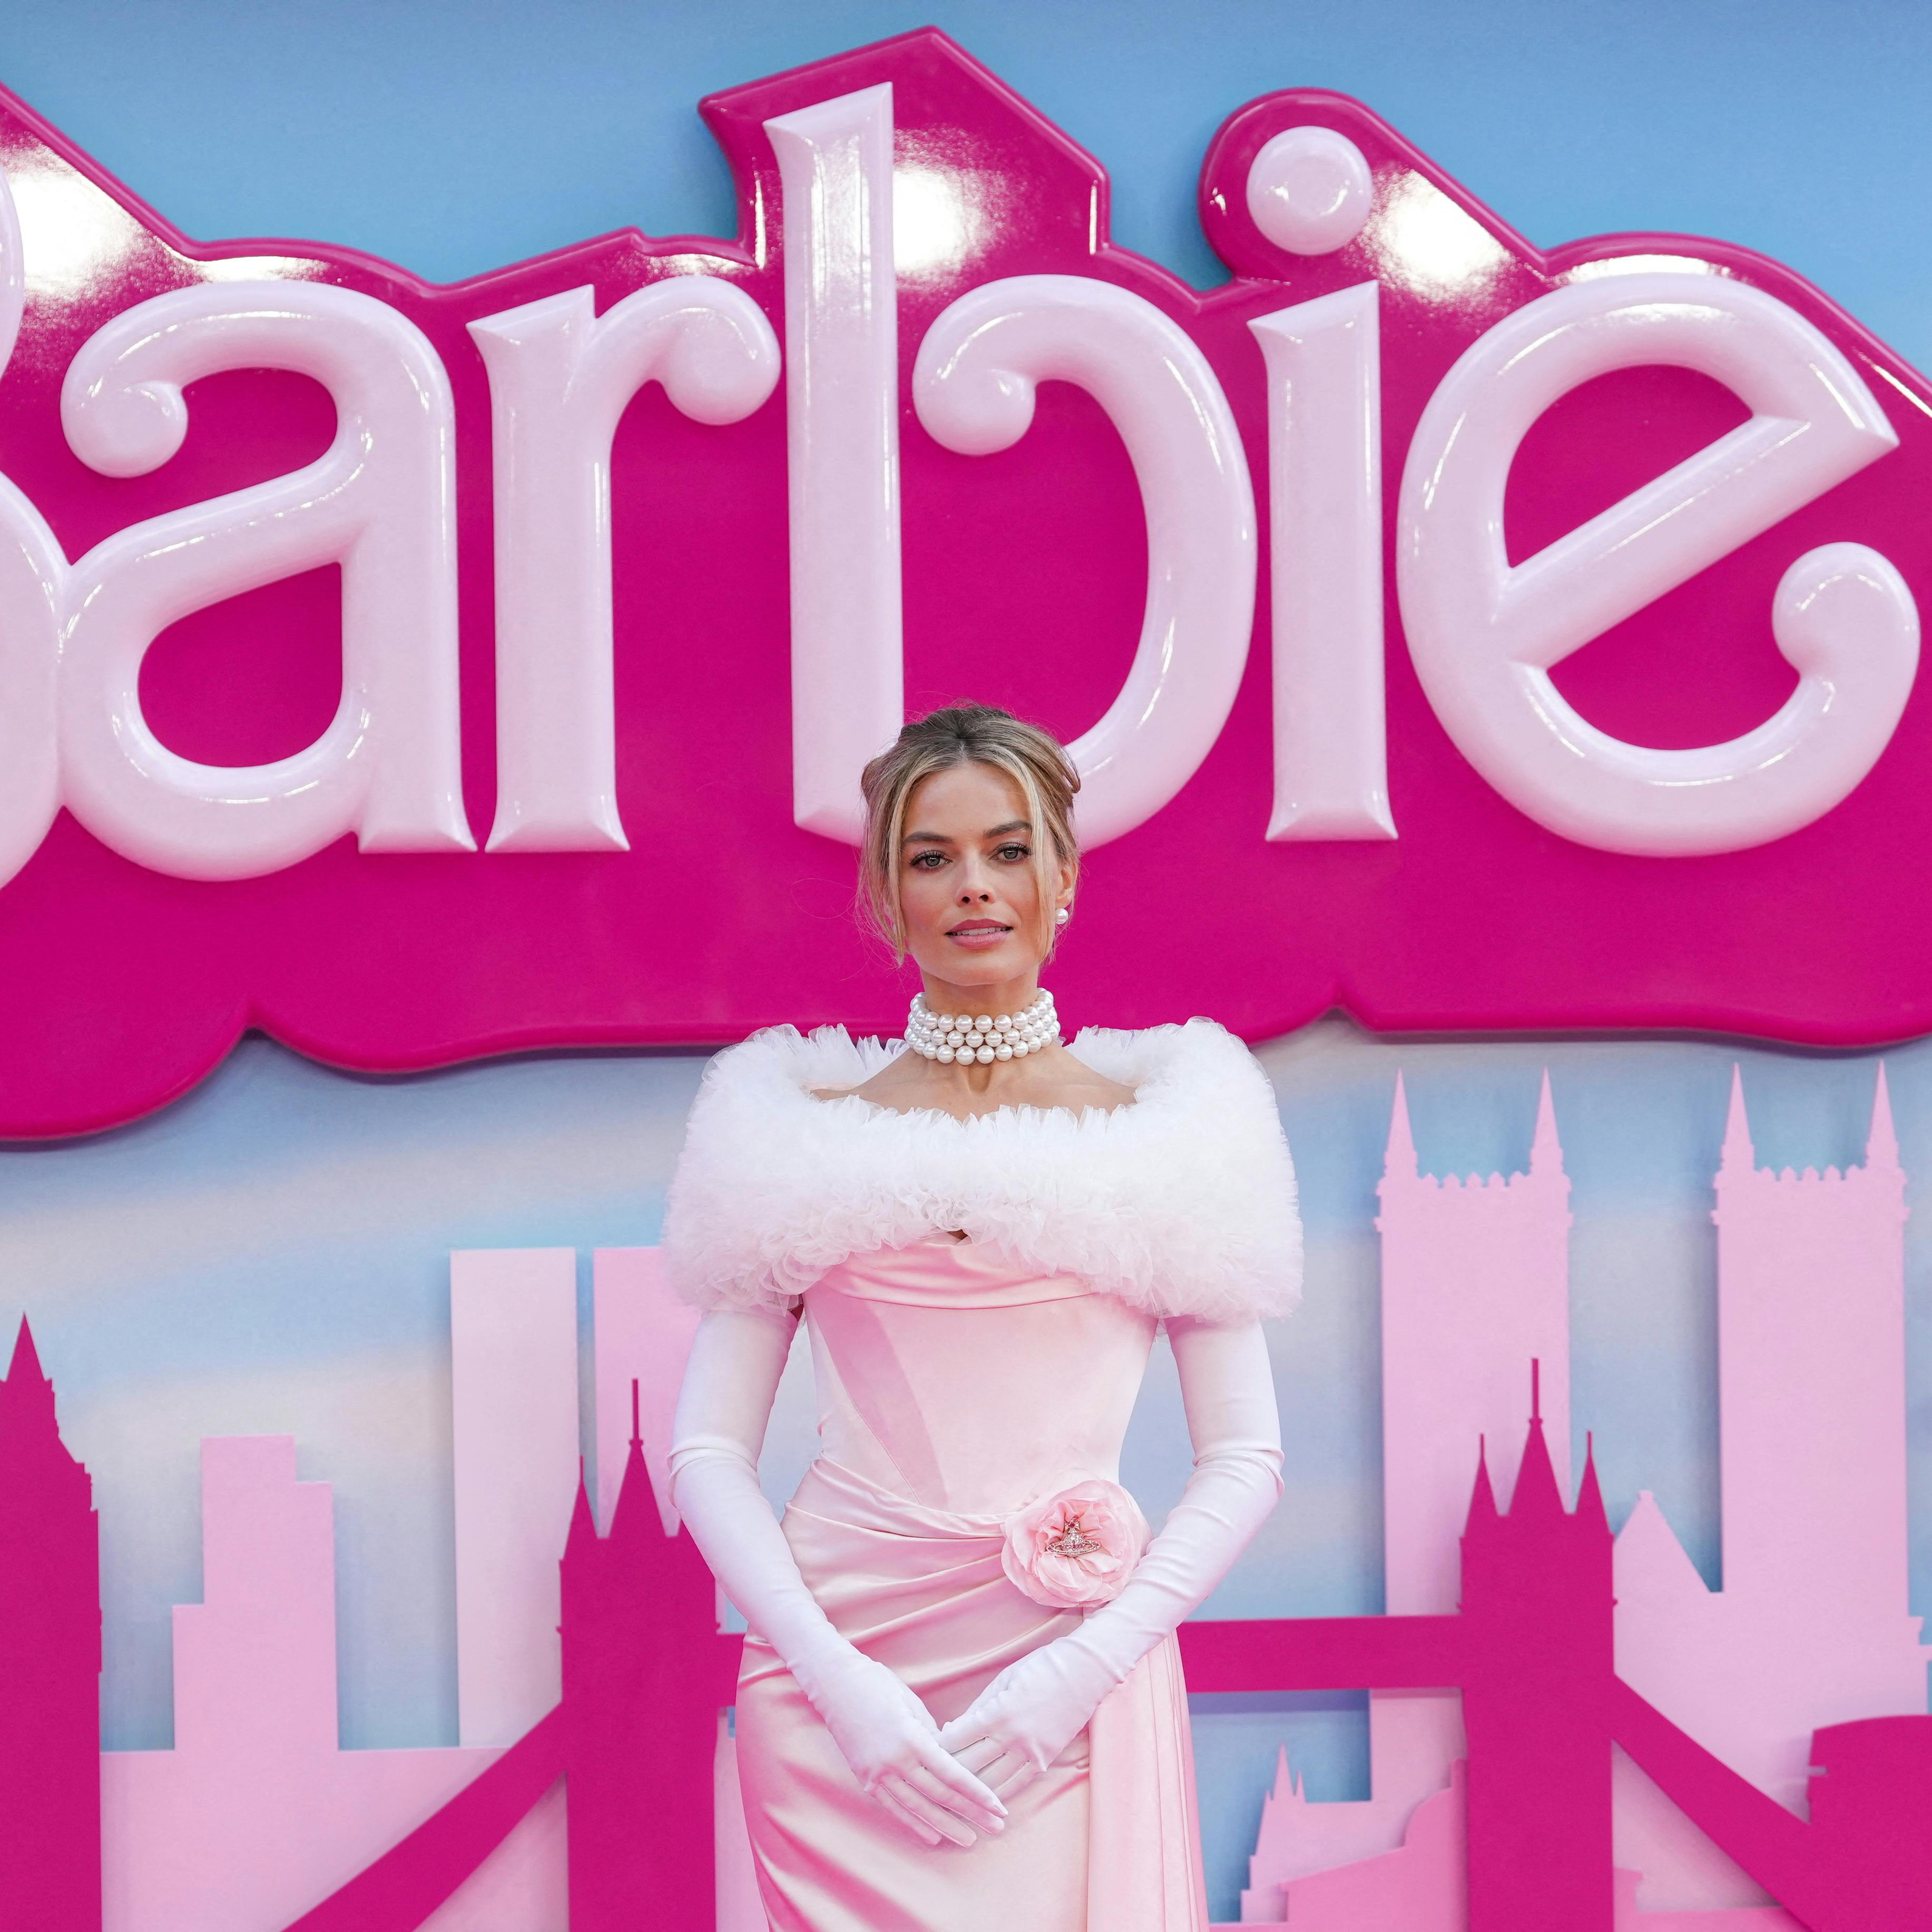 FILE PHOTO: Margot Robbie attends the European premiere of "Barbie" in London, Britain July 12, 2023. REUTERS/Maja Smiejkowska/File Photo